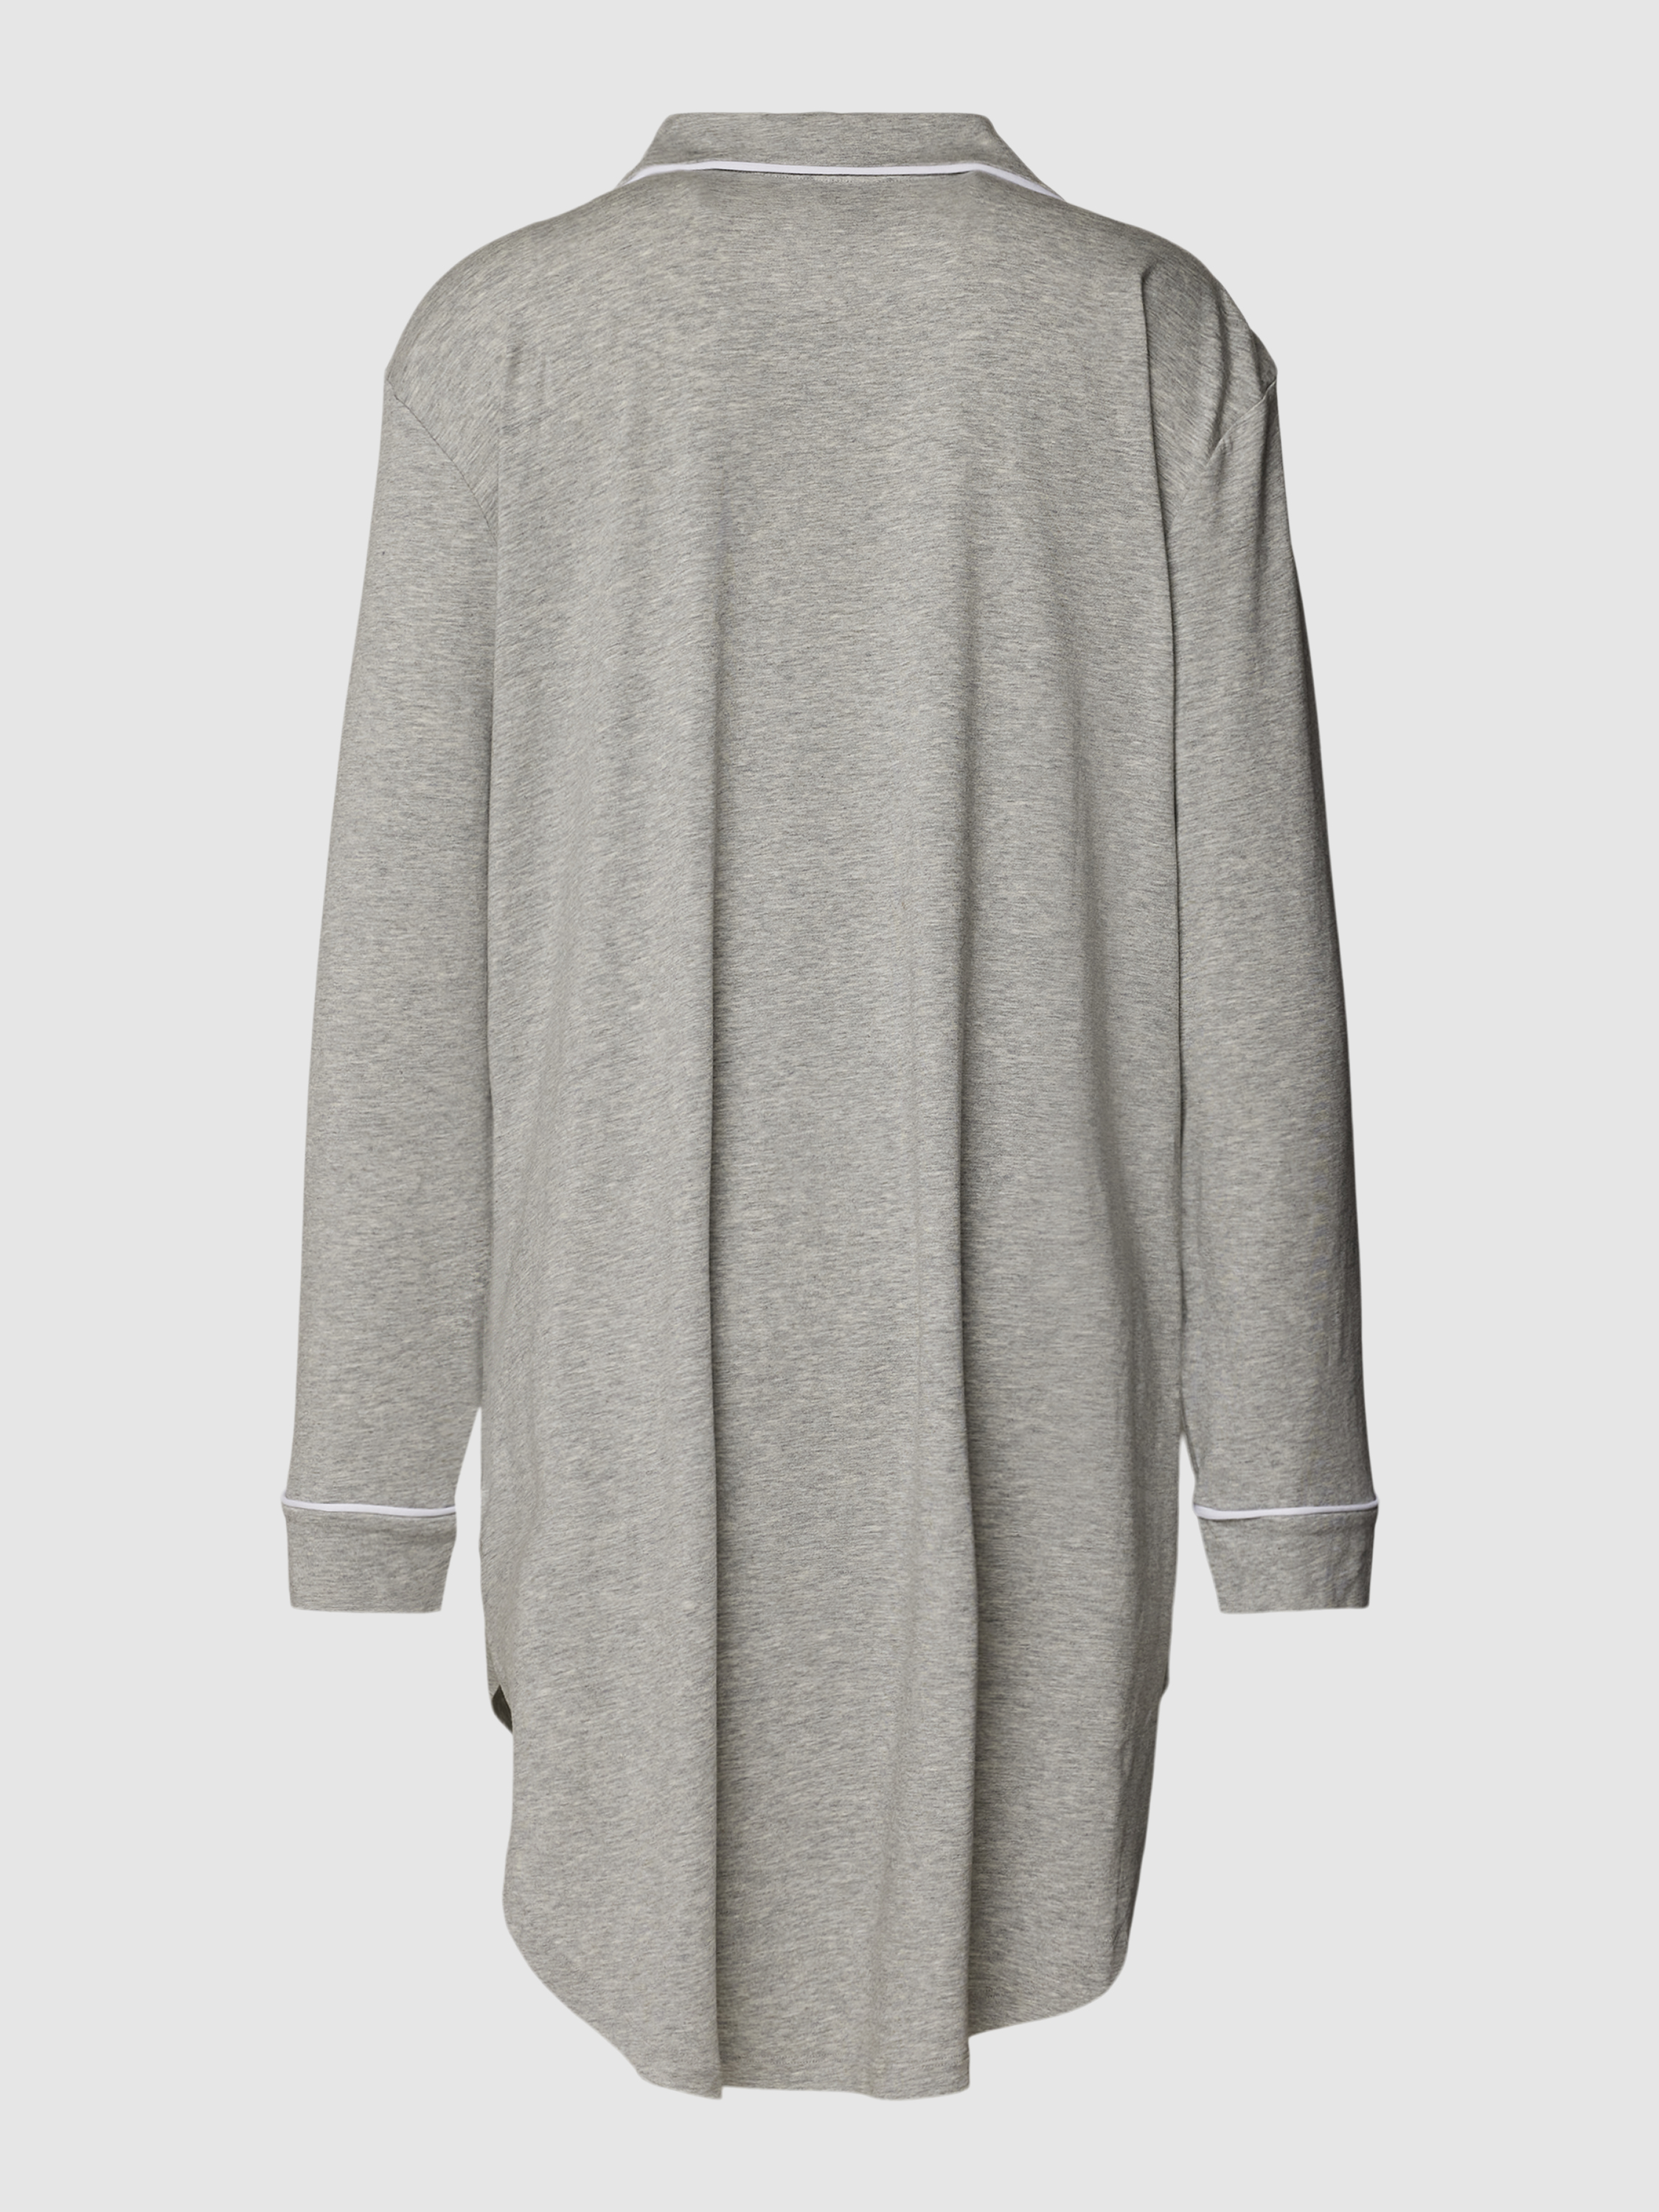 Рубашка домашняя женская Polo Ralph Lauren 1794436 серая S (доставка из-за рубежа)